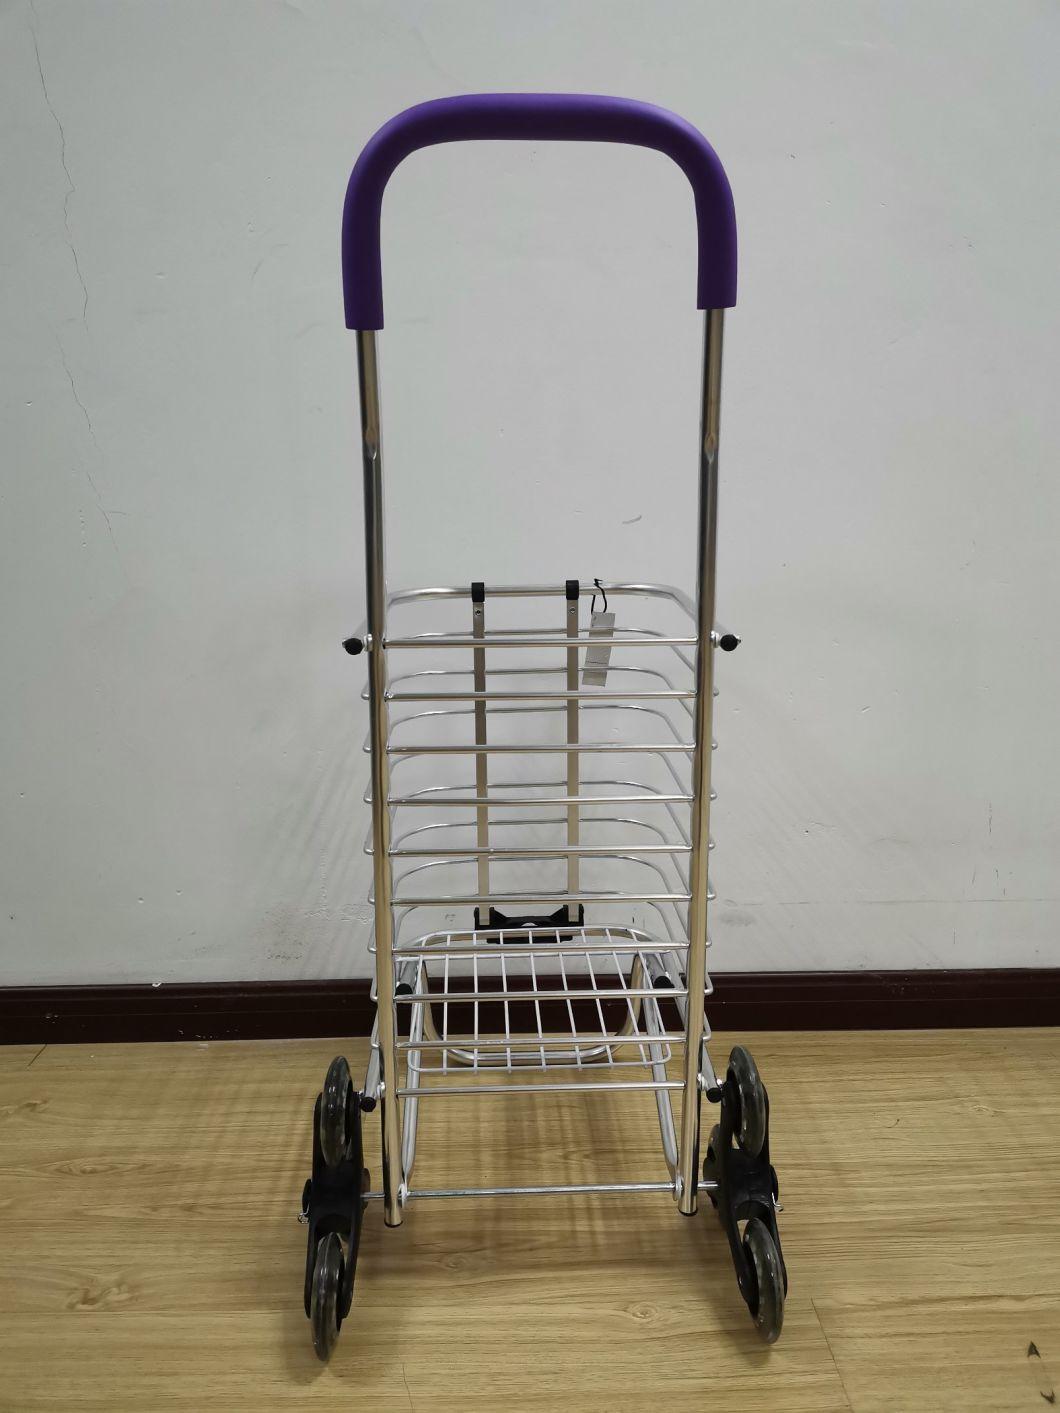 China Supplier 3 Wheel Stair Climbing Folding Cart for Farmers Market Shopping